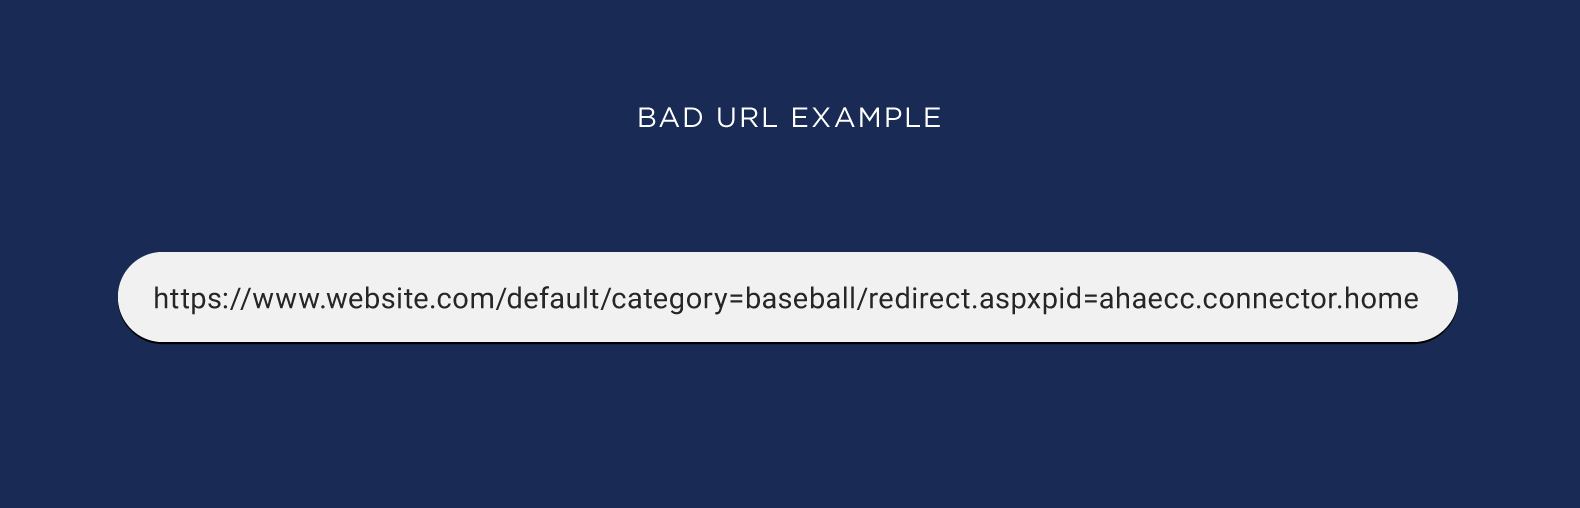 Bad URL example